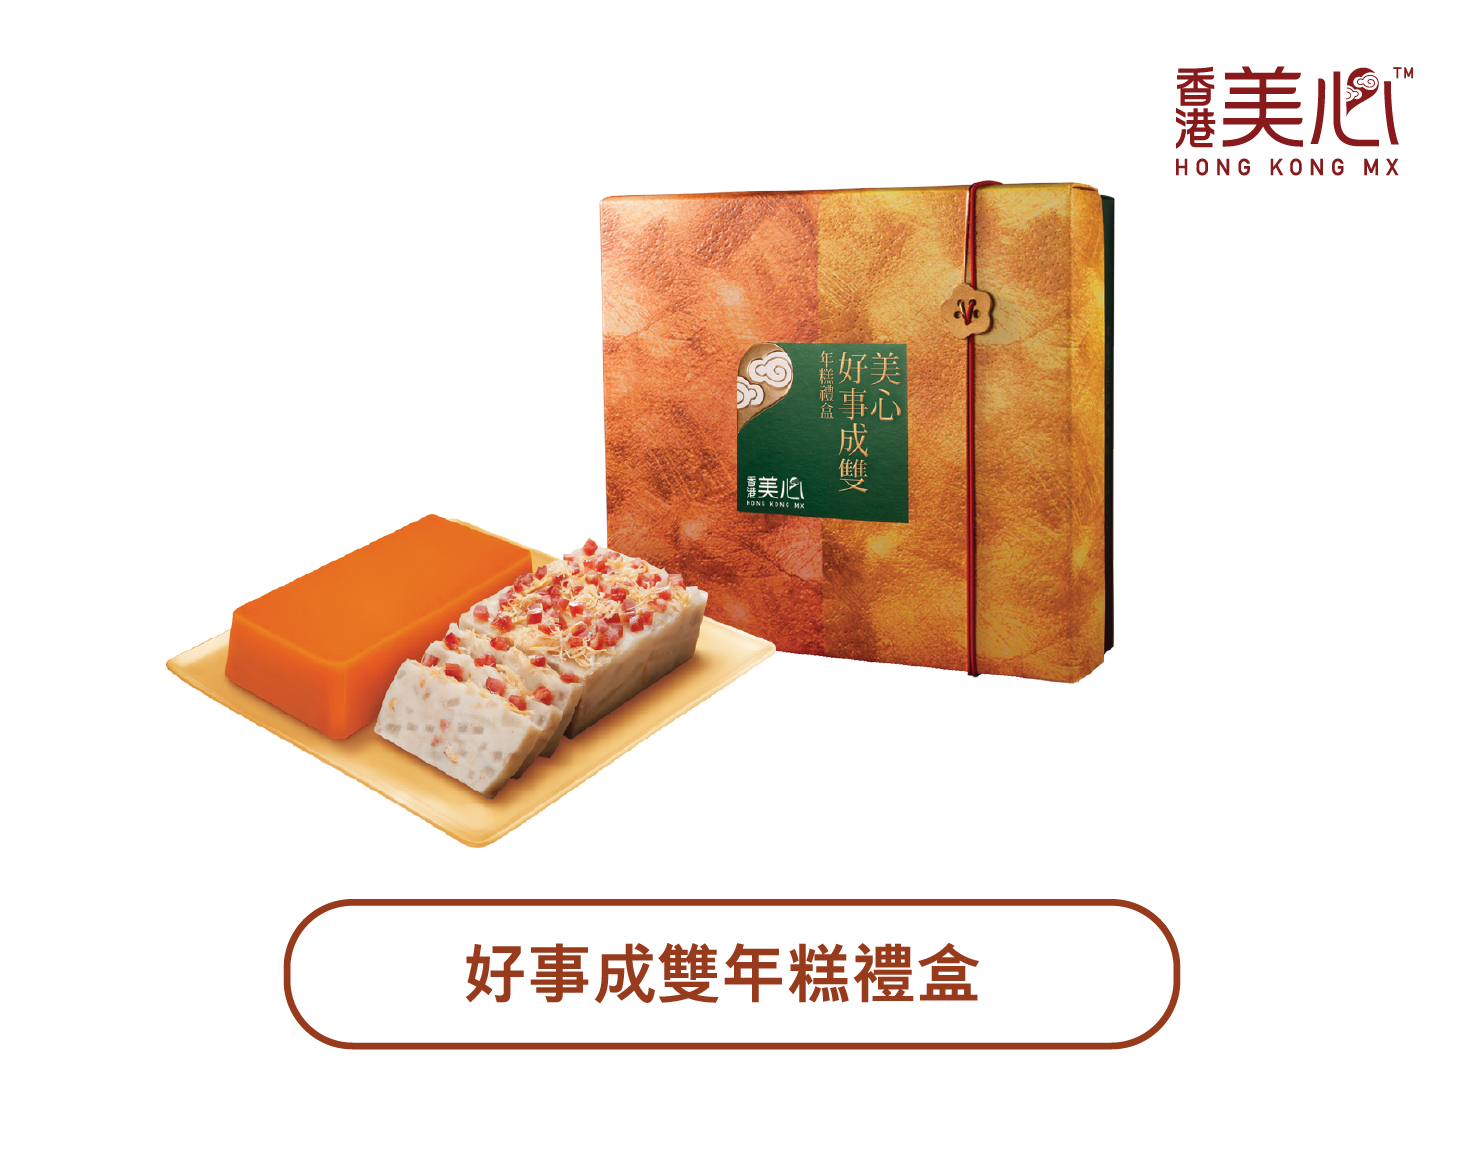 Hong Kong MX | MX Chinese Pudding Twin Set (Physical Coupon)